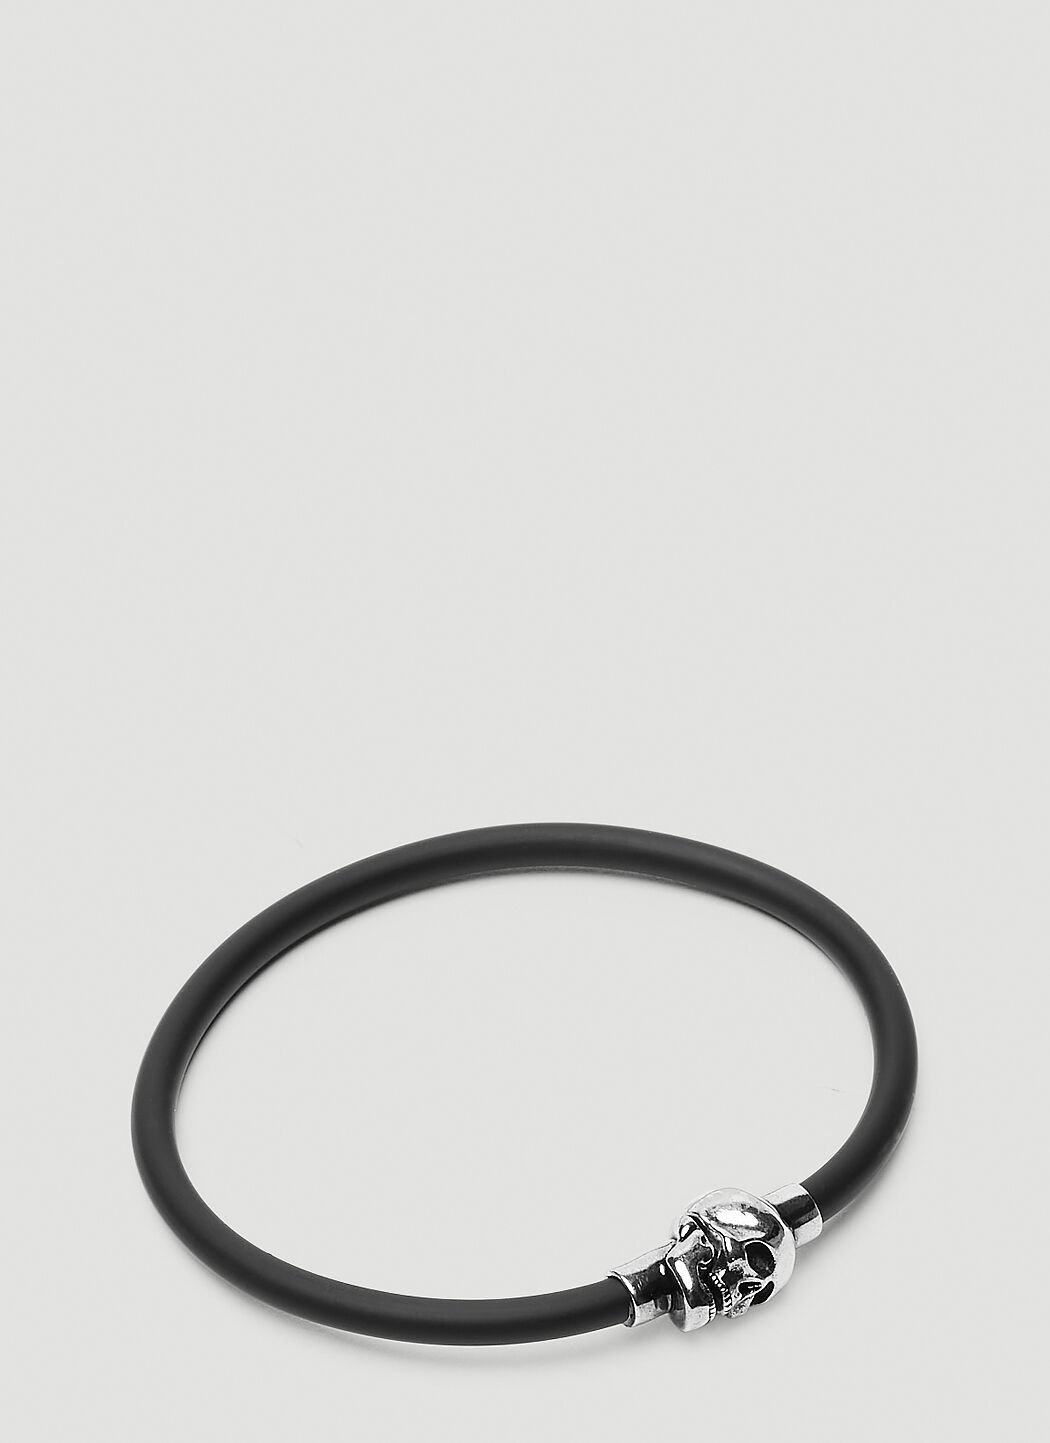 Alexander McQueen Skull Motif Cord Bracelet Black amq0152016